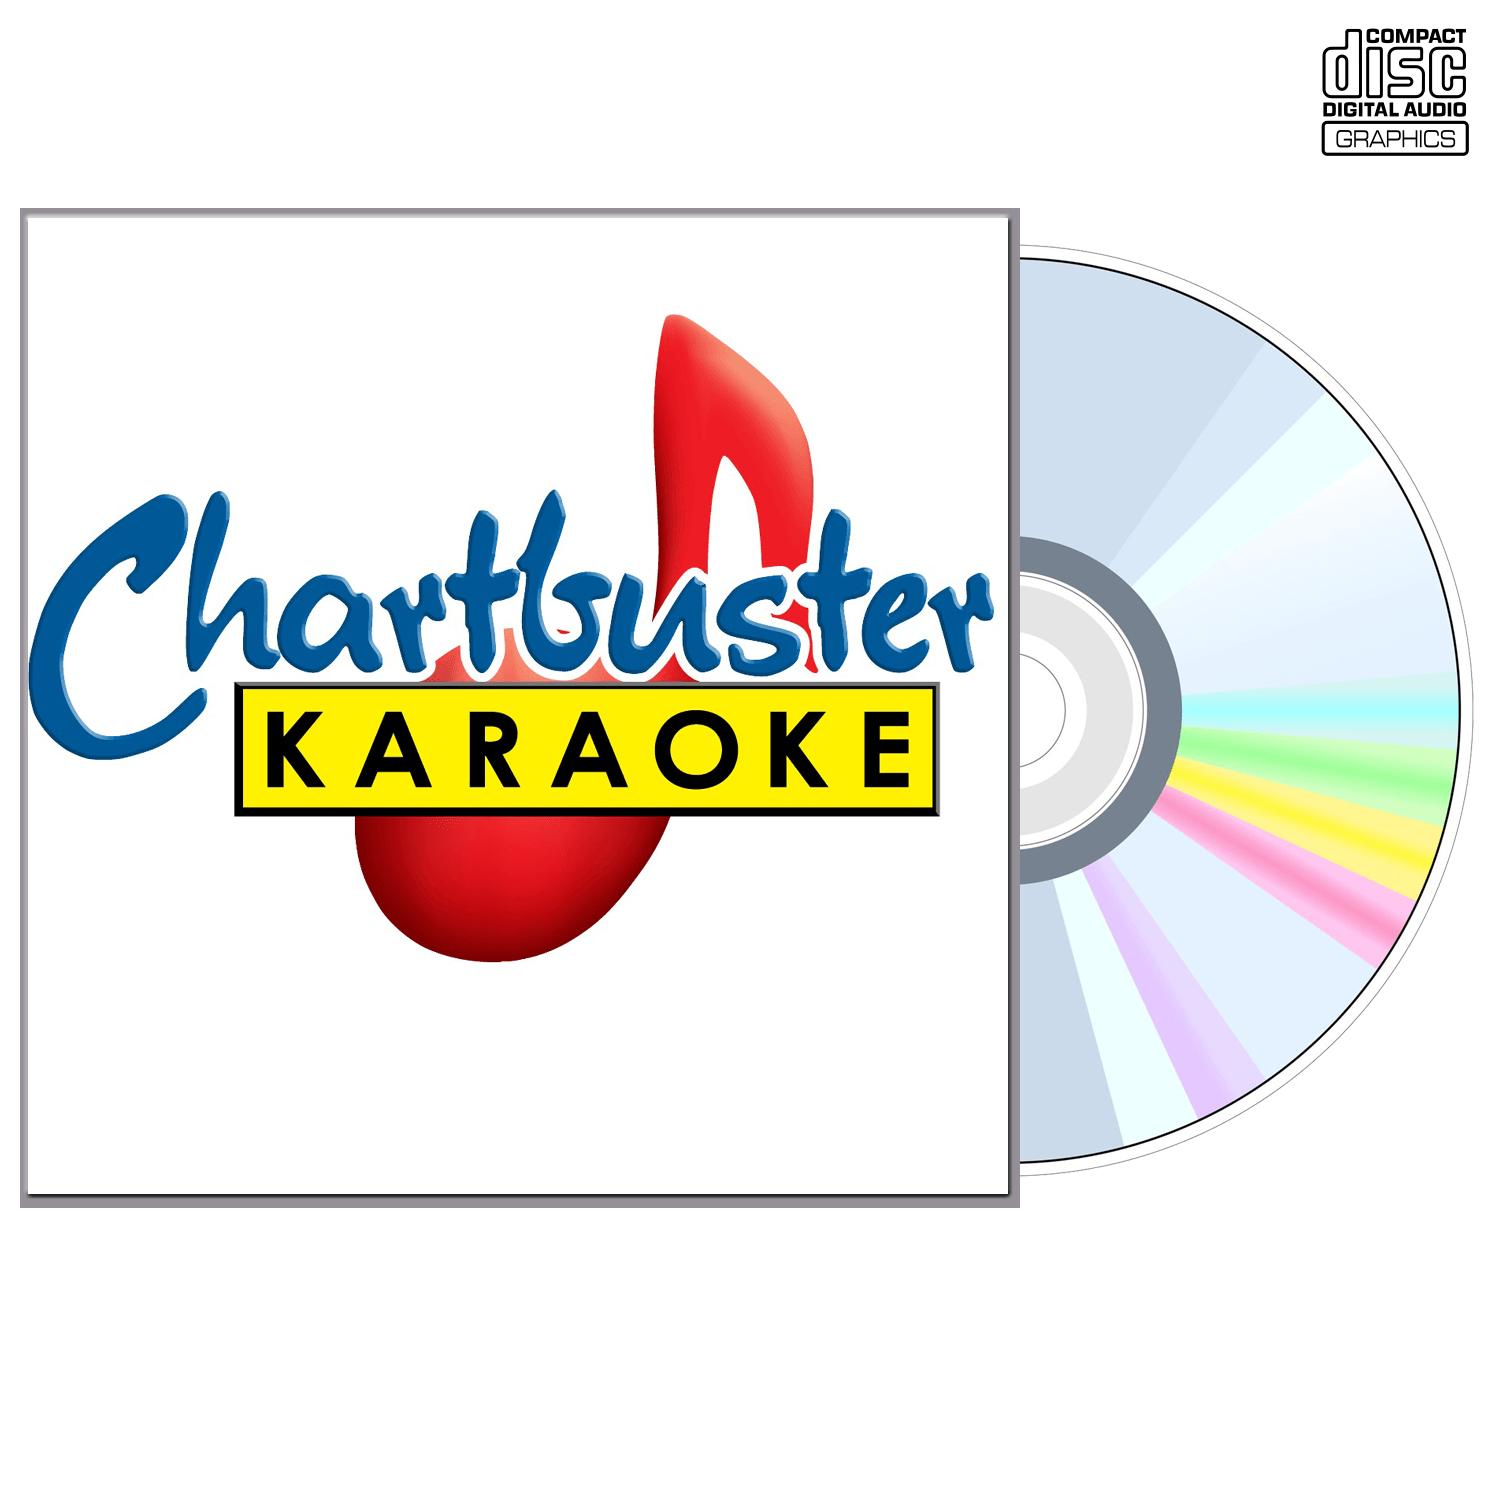 Helen Reddy - CD+G - Chartbuster Karaoke - Karaoke Home Entertainment